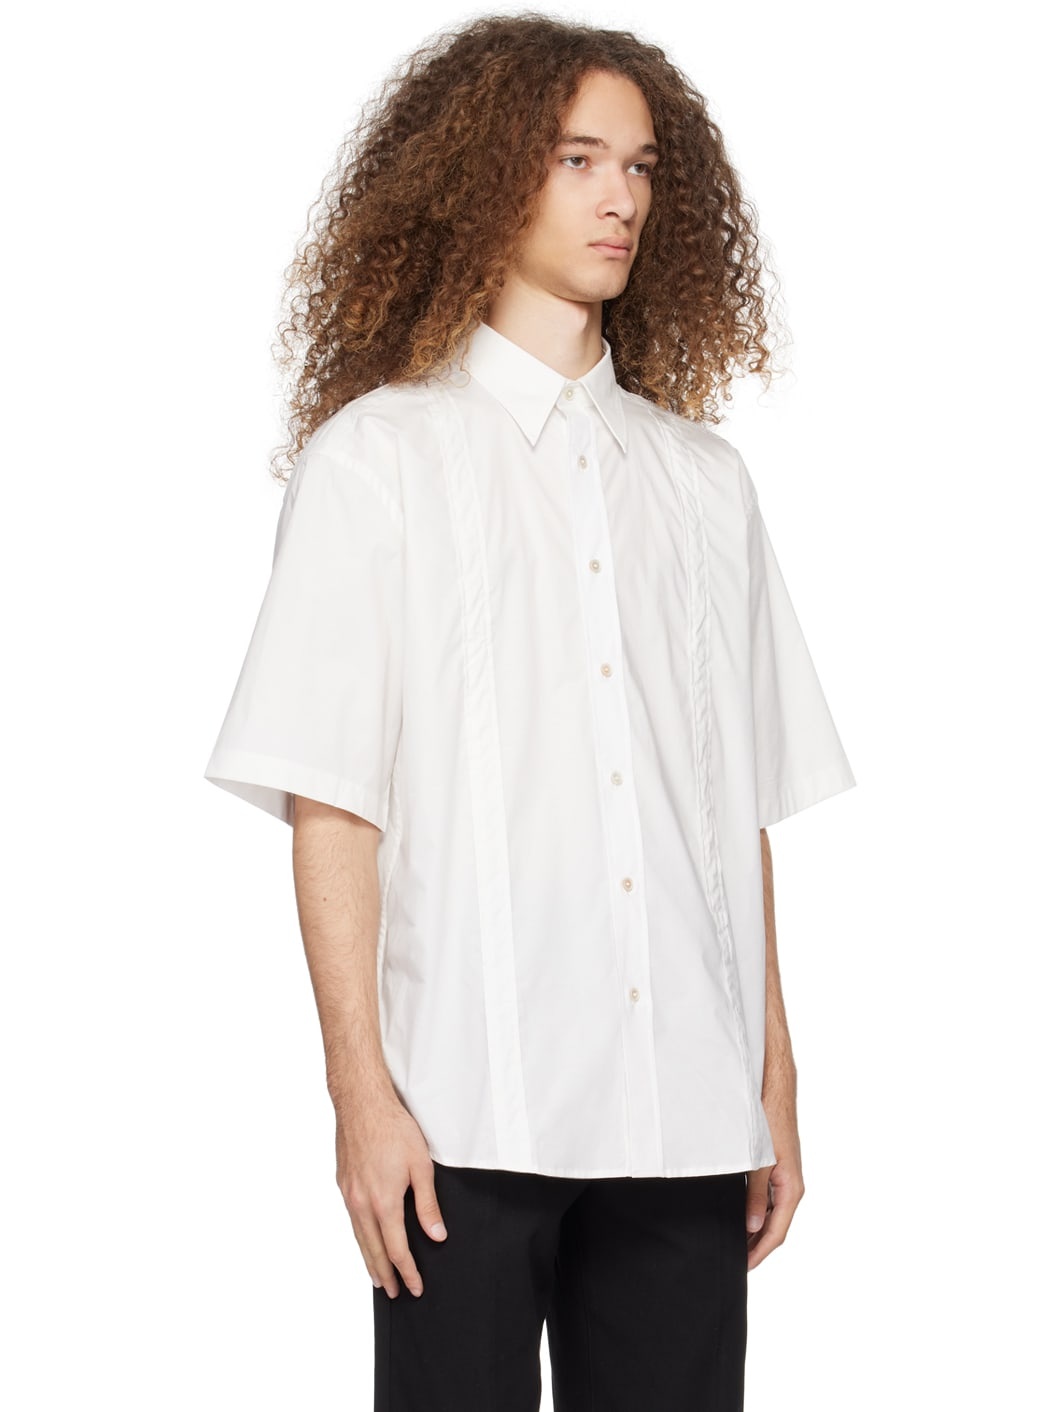 White Button-Up Shirt - 4